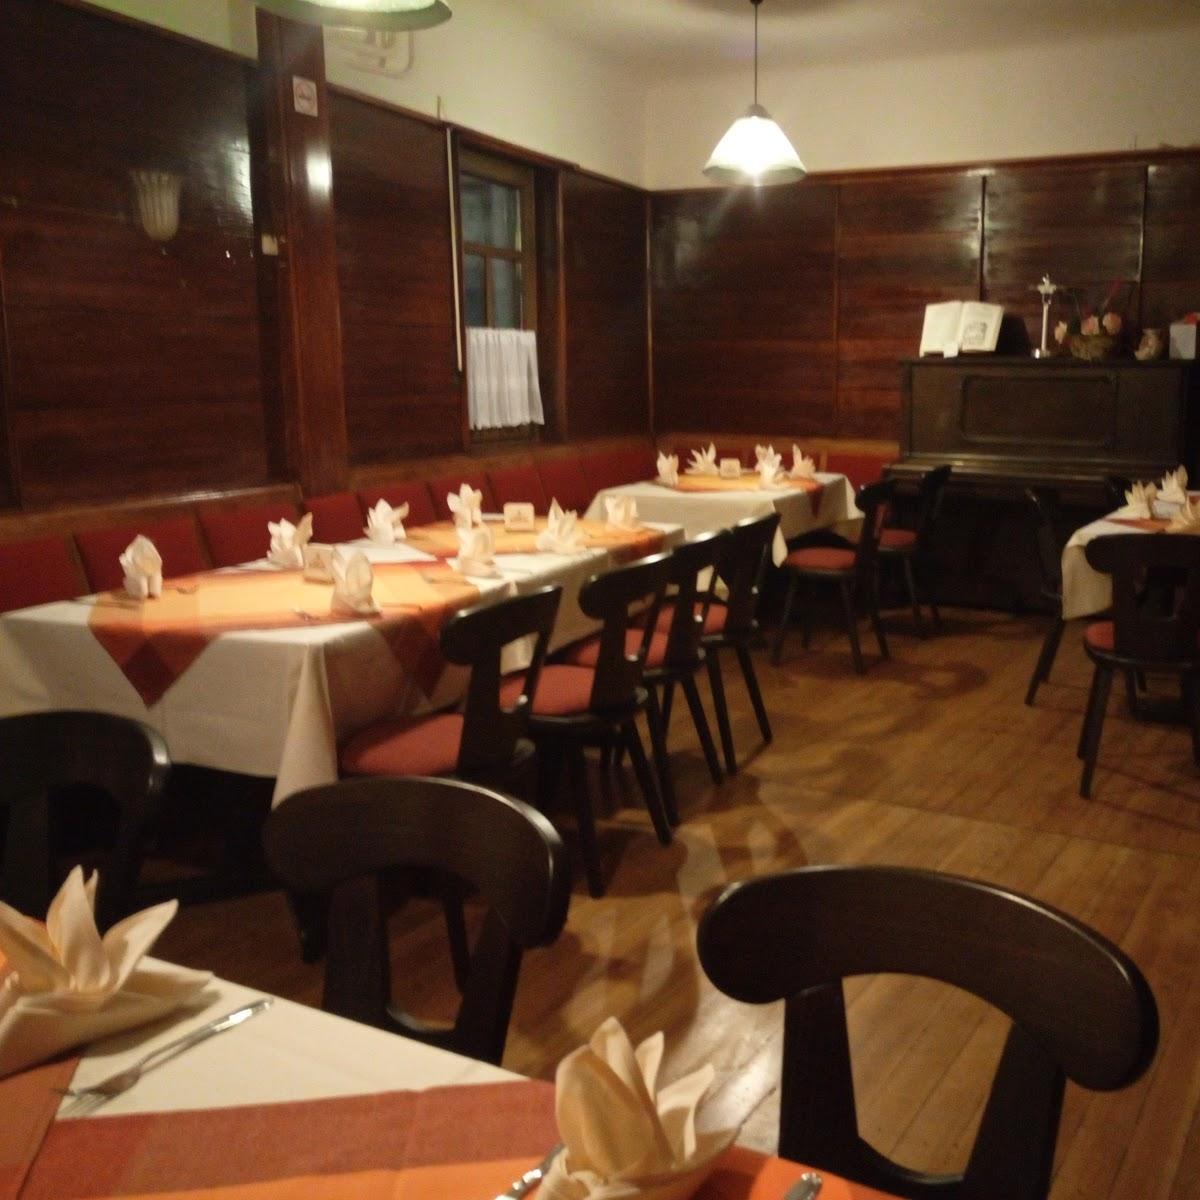 Restaurant "Waldhorn Restaurant" in Leonberg